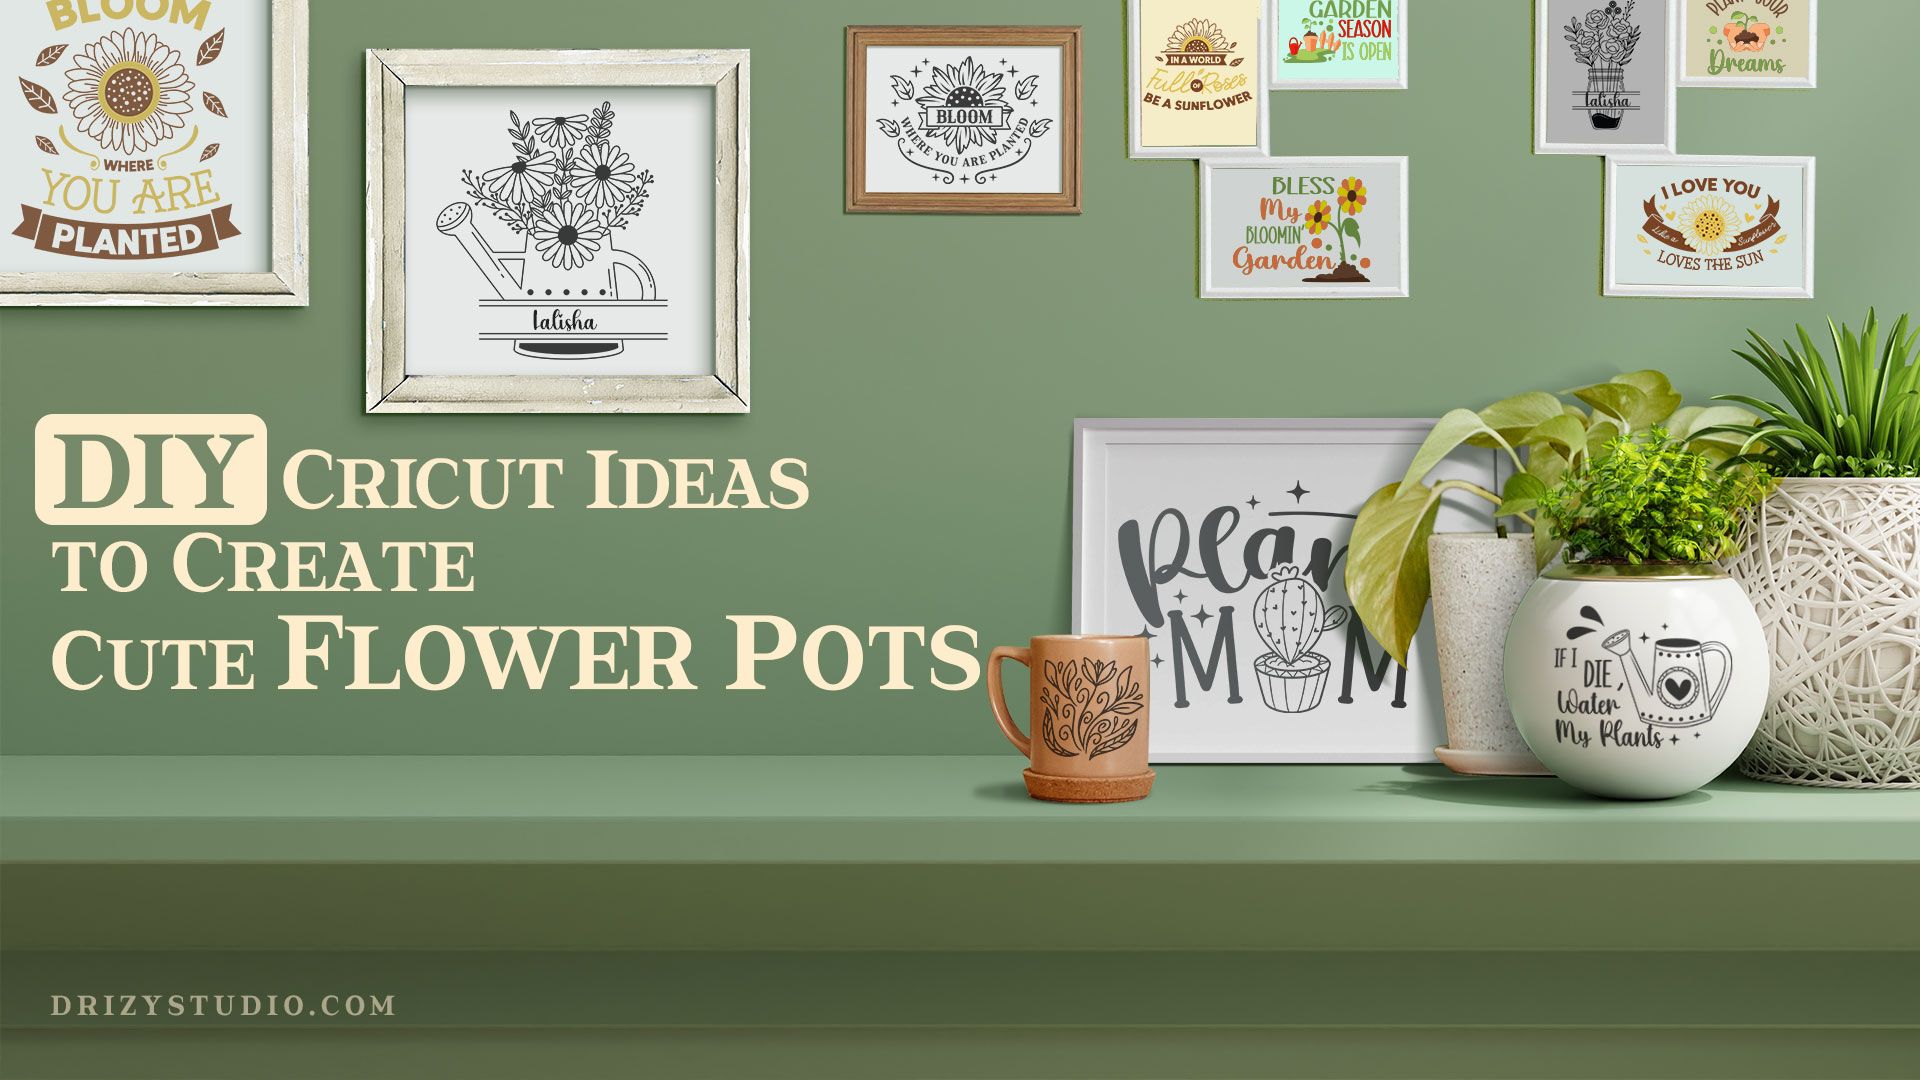 DIY Cricut Ideas to Create Cute Flower Pots cover